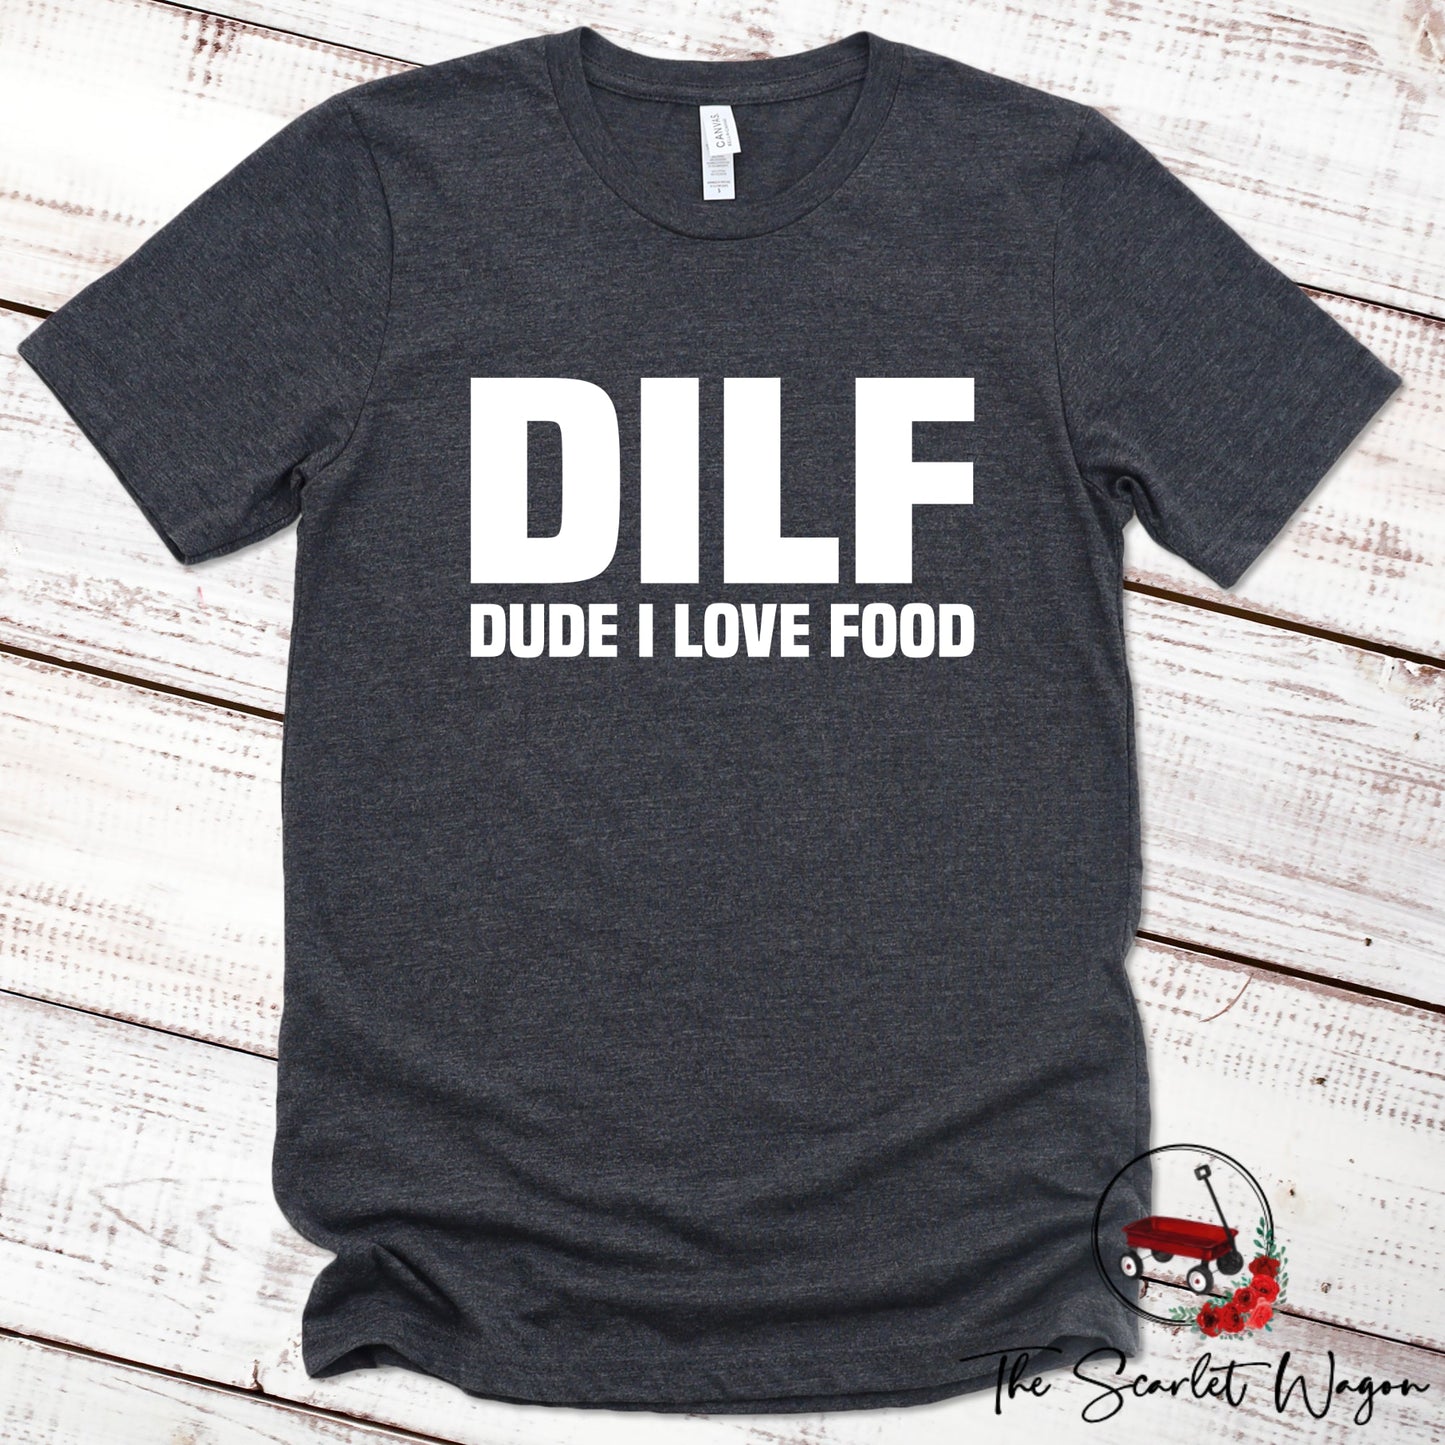 DILF - Dude I Love Food Premium Tee Scarlet Wagon Dark Gray Heather XS 